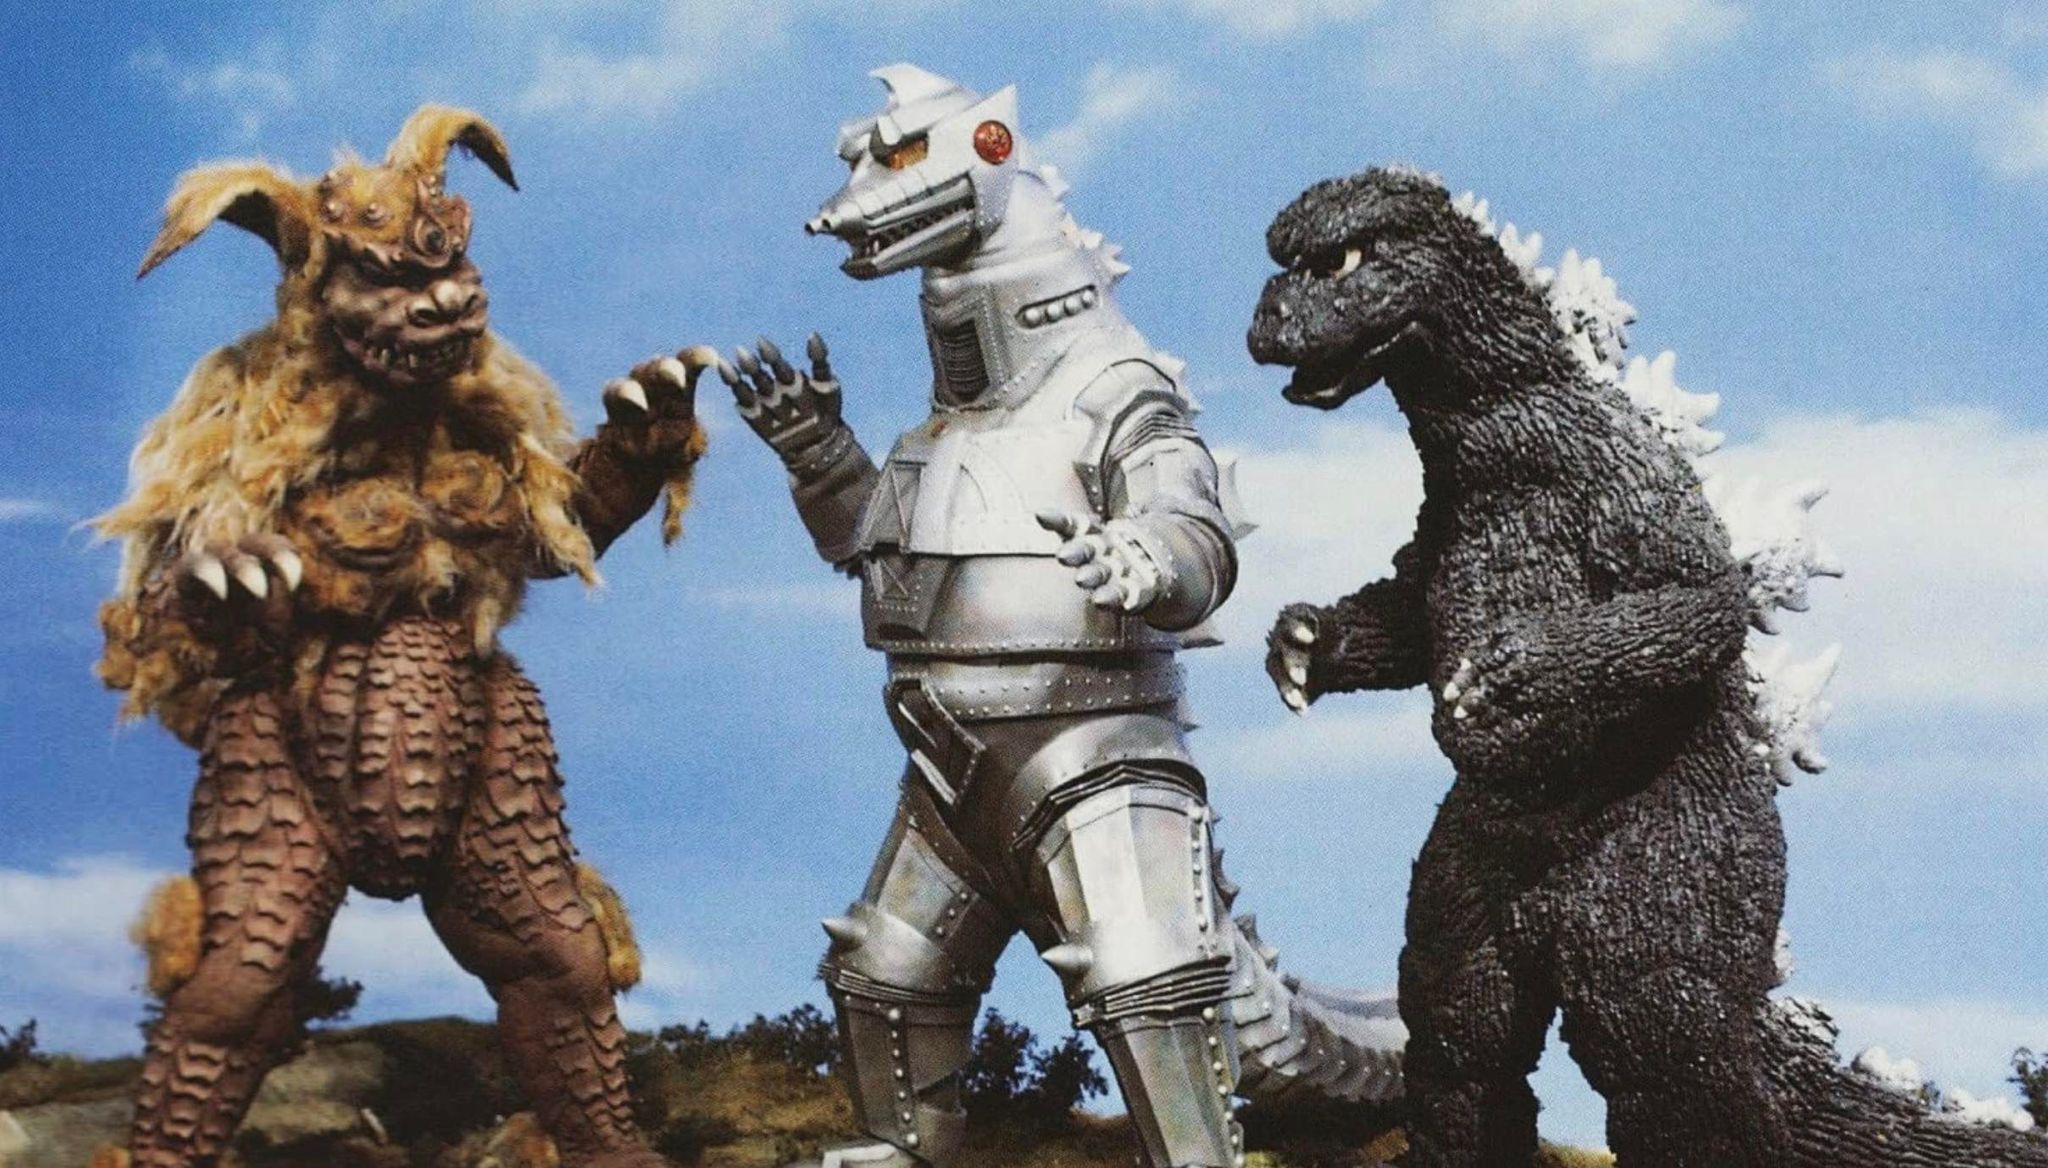 Watch Godzilla vs. Mechagodzilla on Comet TV